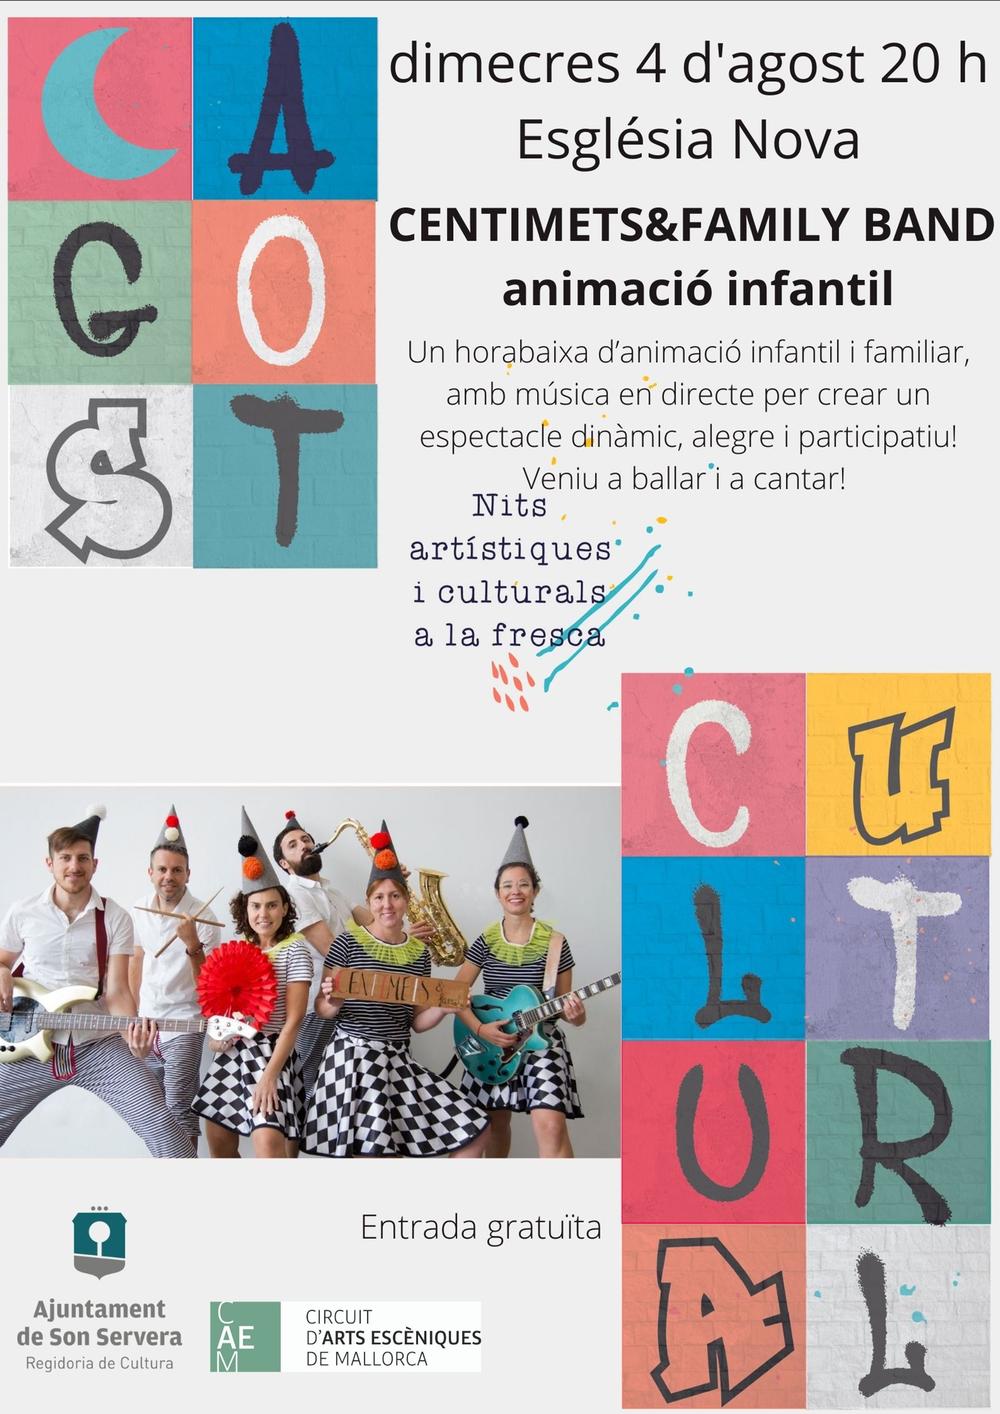 Centimets Teatro & Family Band